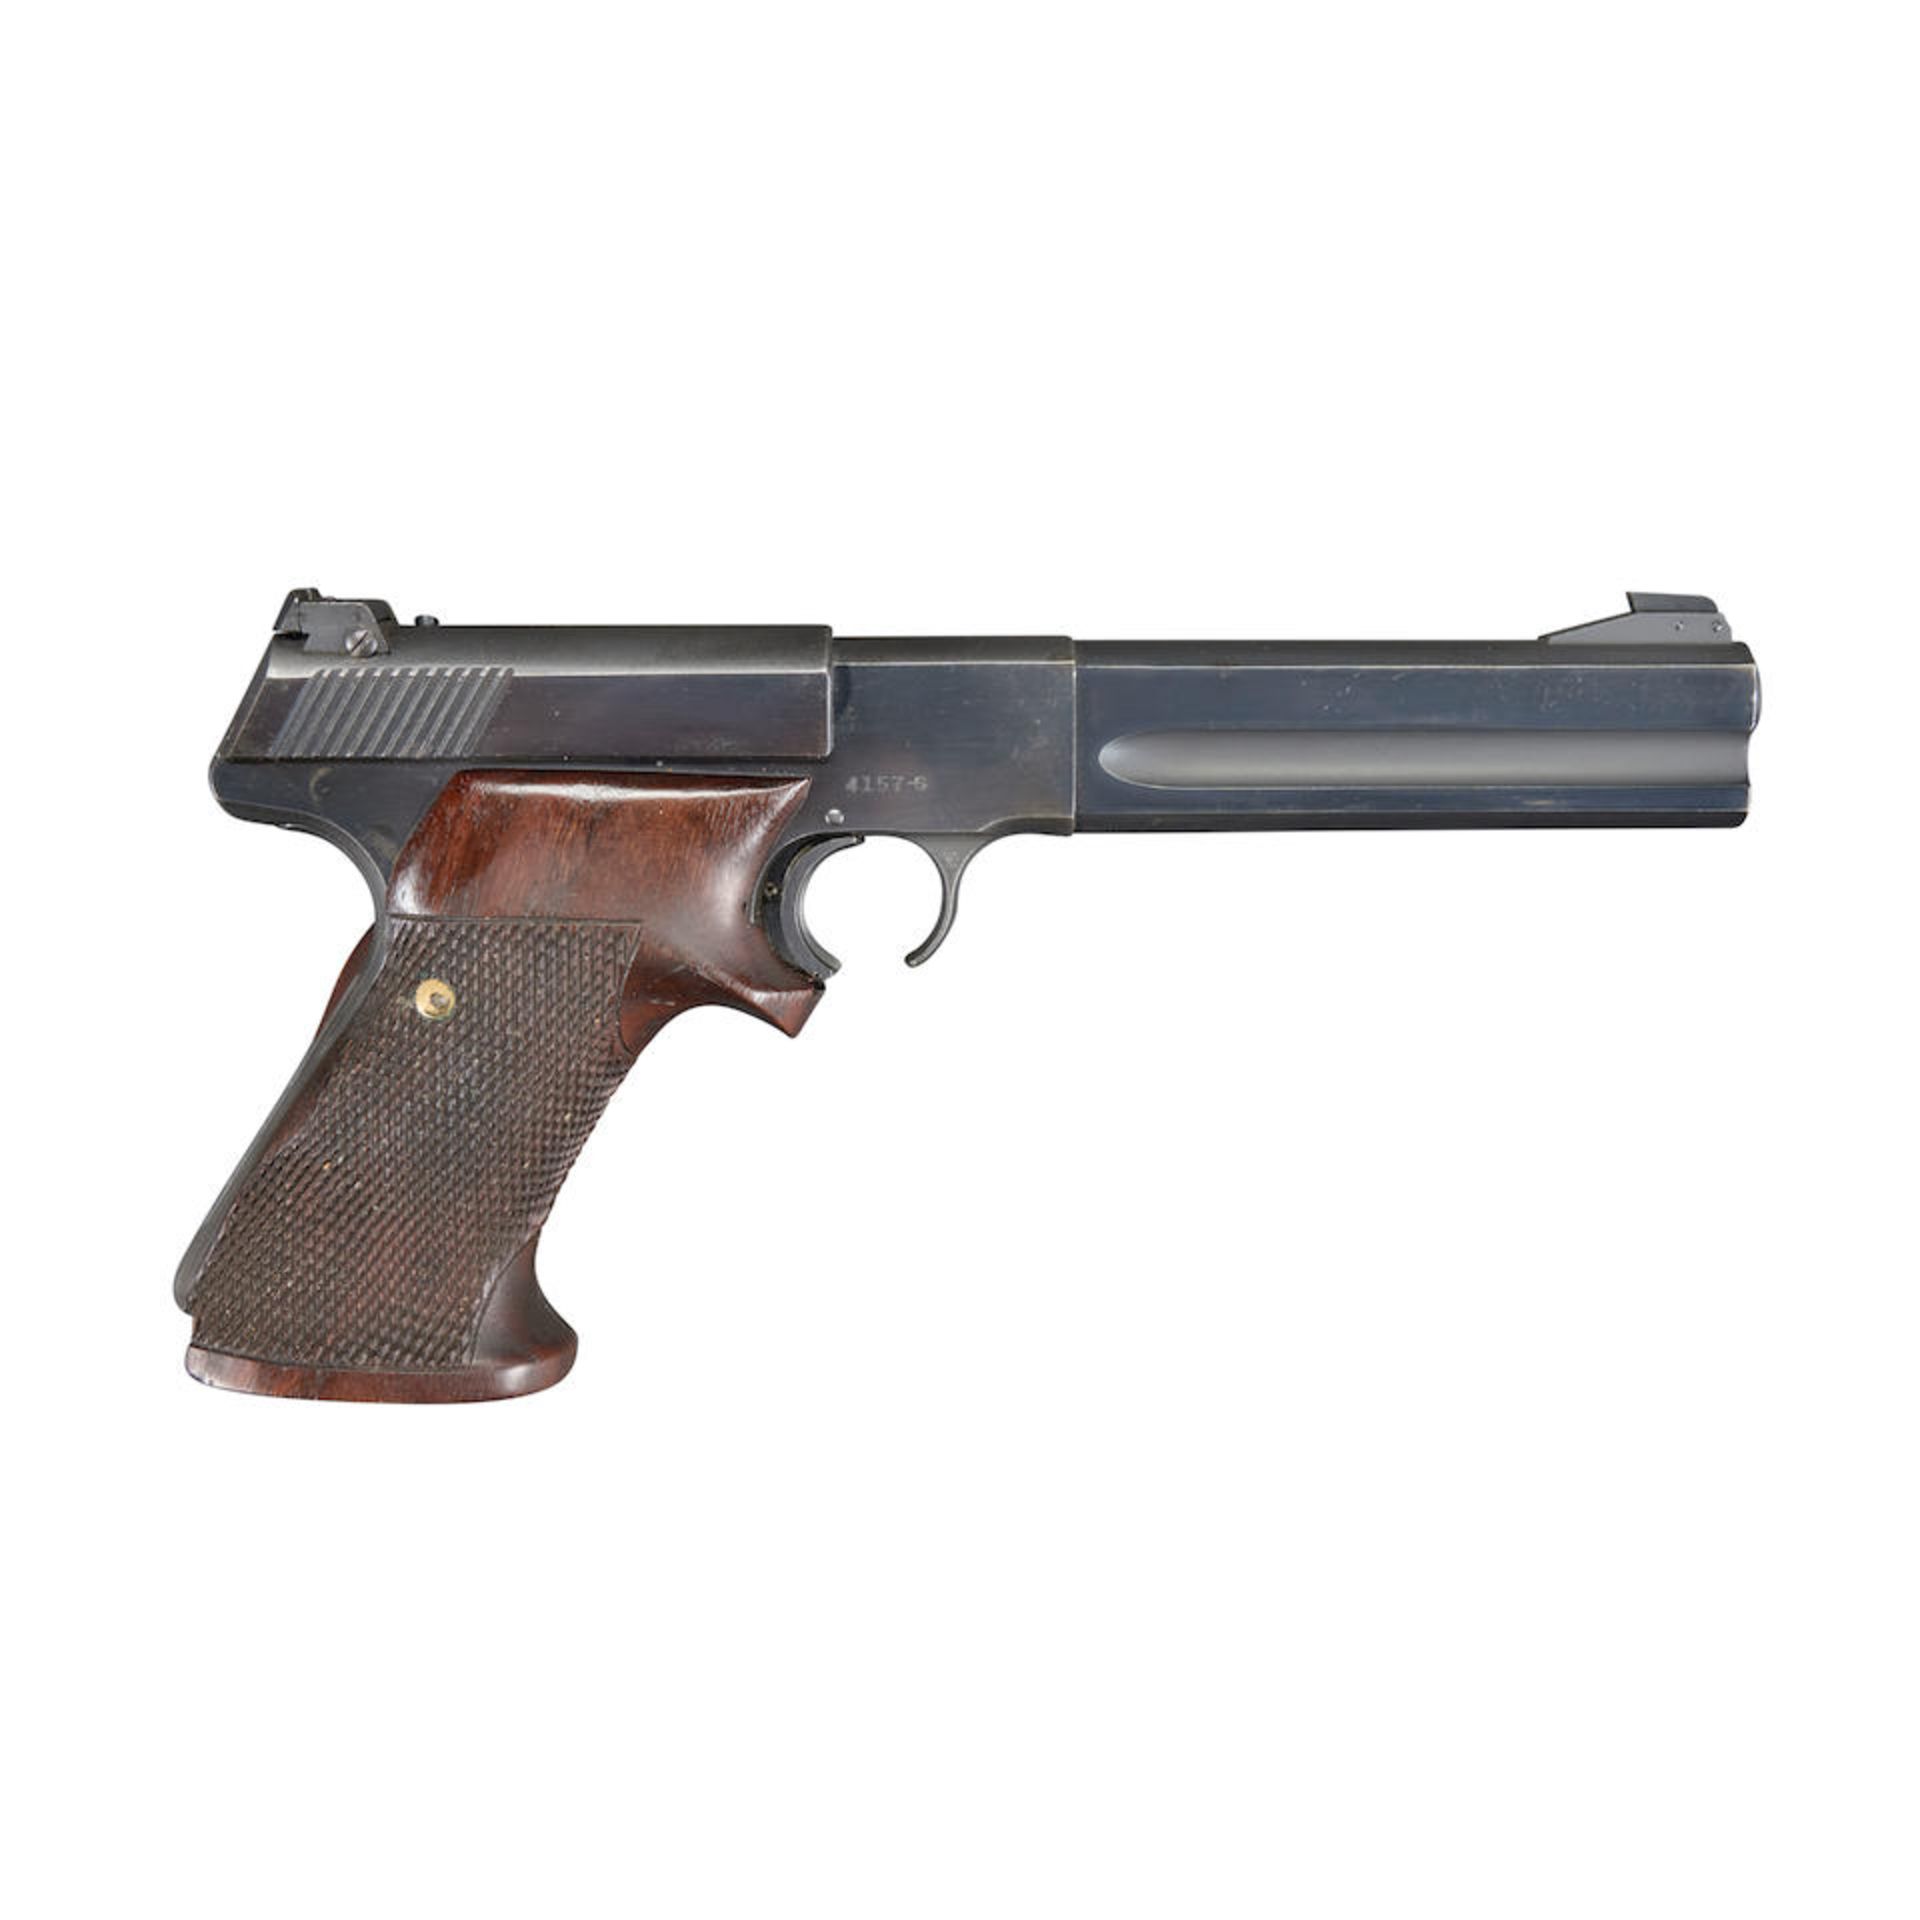 Colt Match Target Semi-Automatic Pistol, Curio or Relic firearm